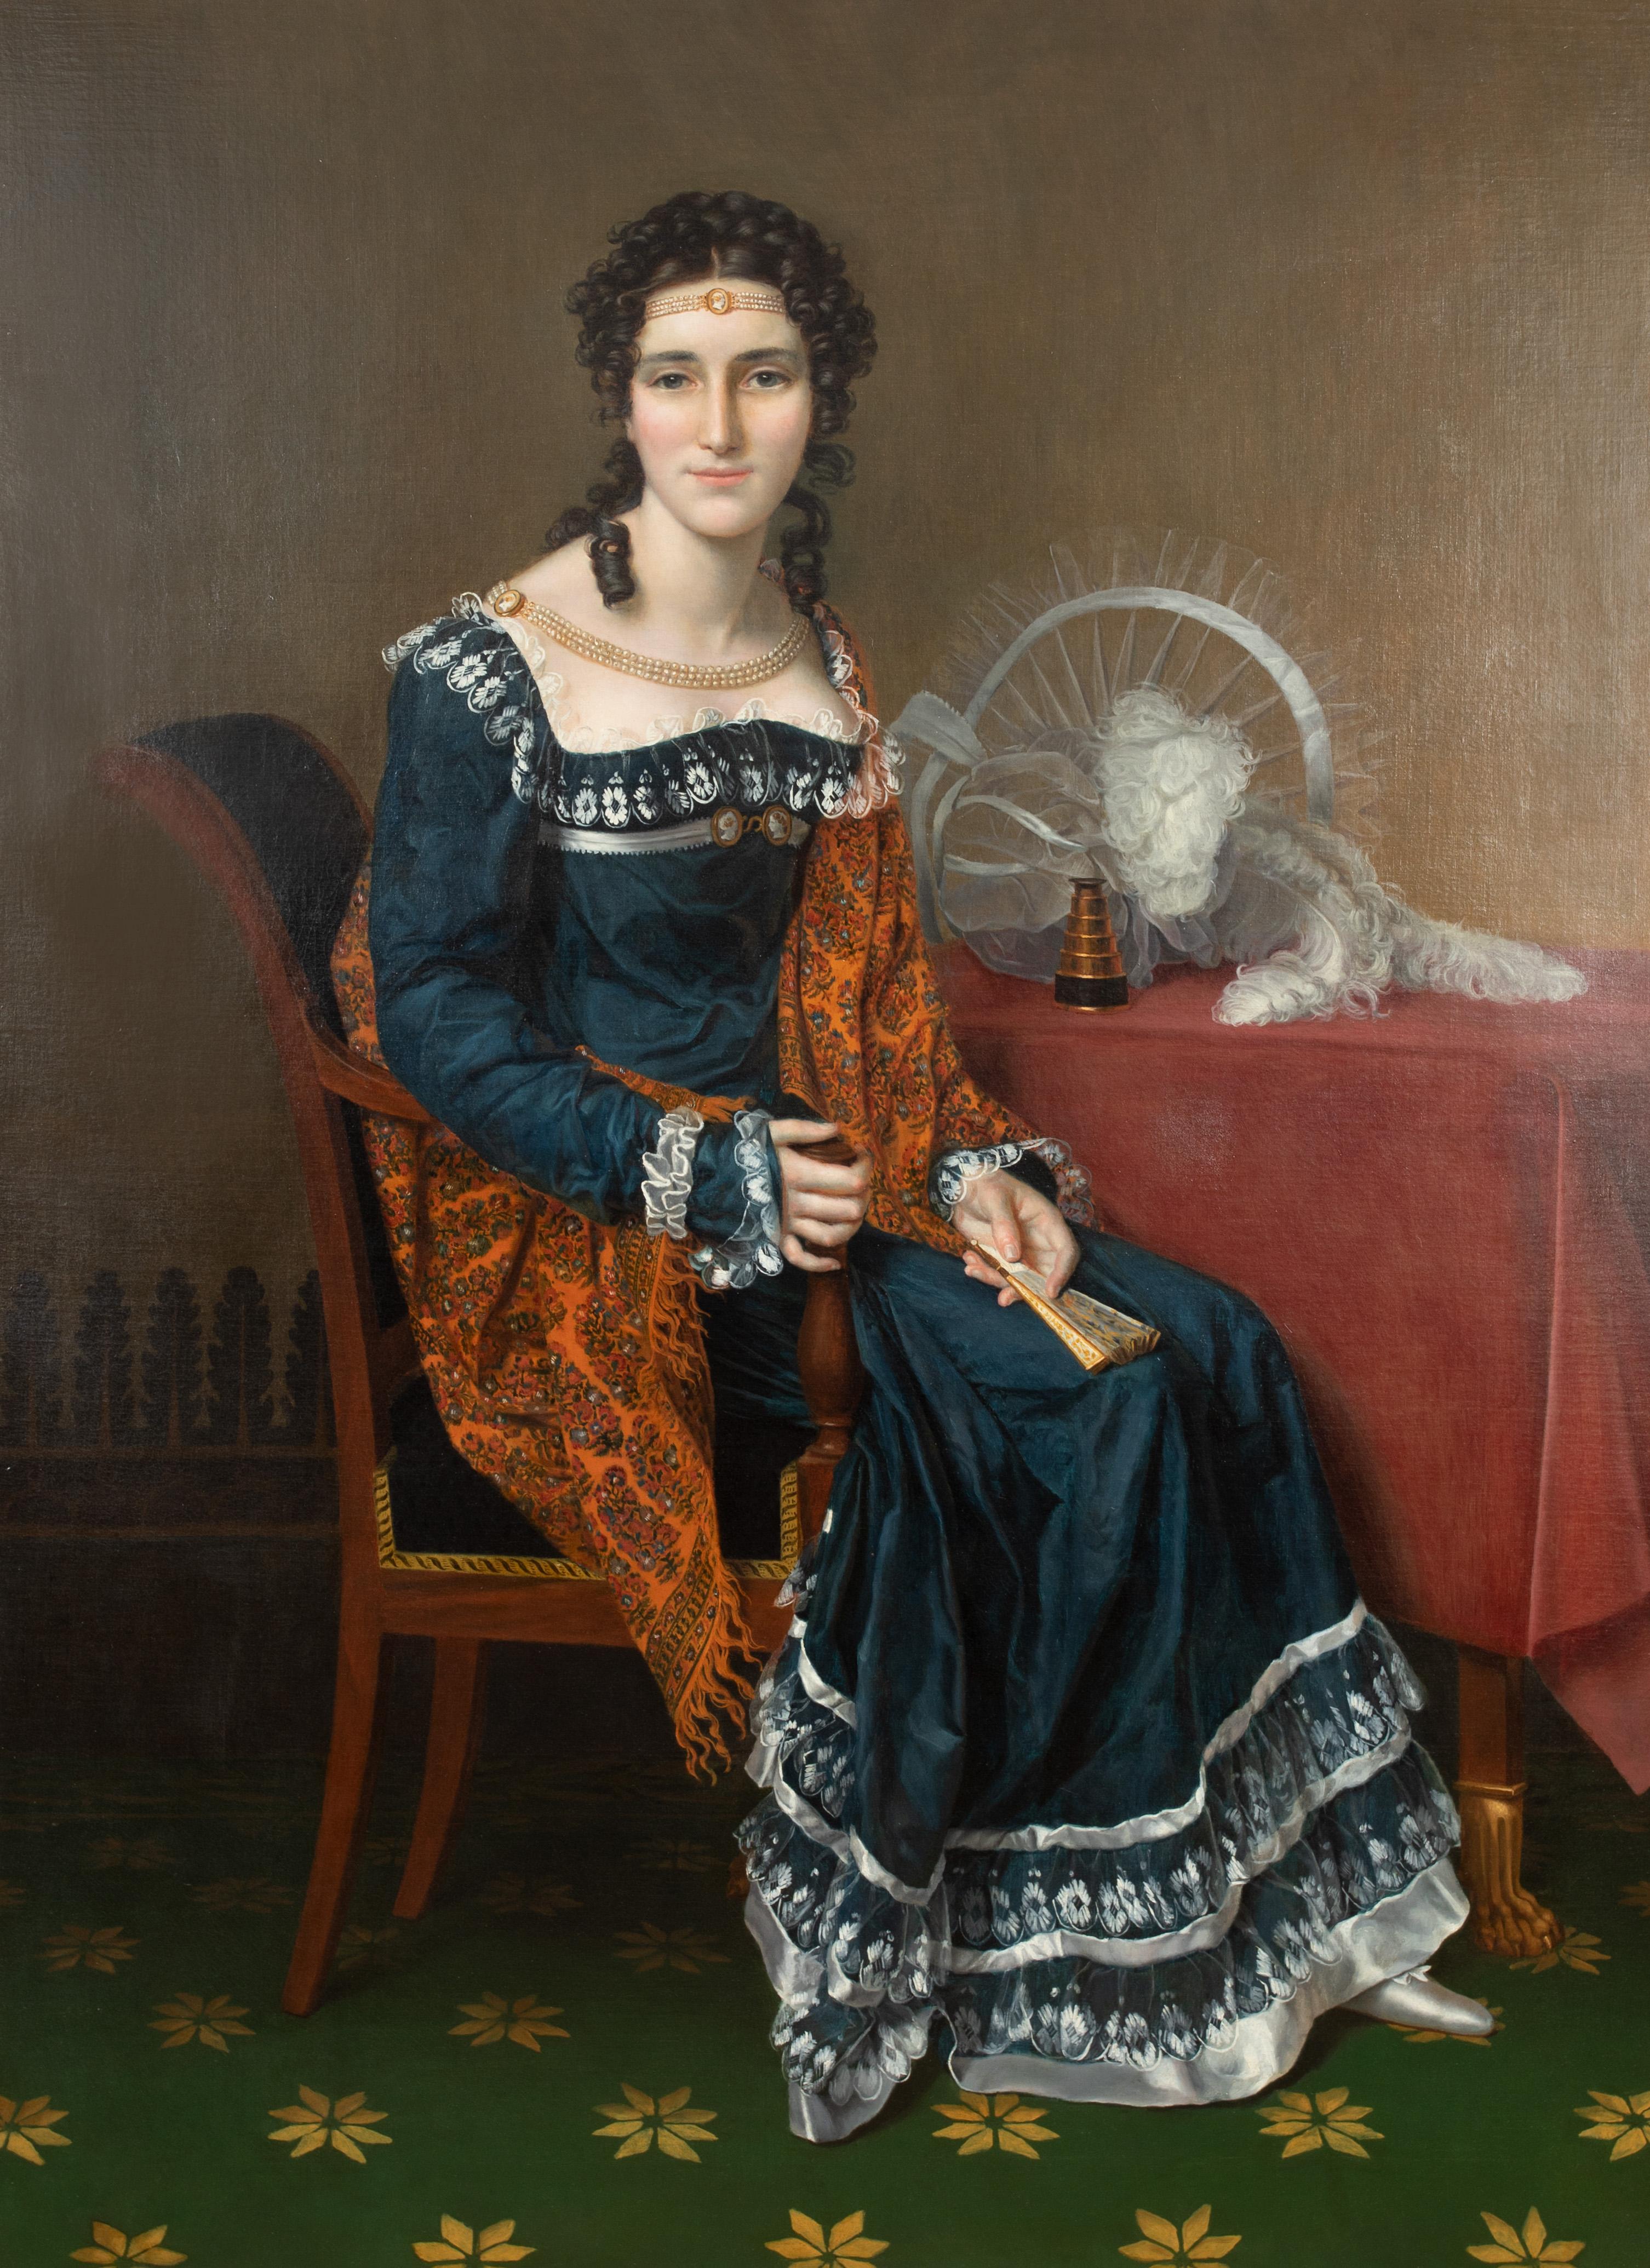 Jean-Auguste-Dominique Ingres Portrait Painting - Portrait Of A Lady, believed to be Madame Juliette Recamier (1777-1849), 